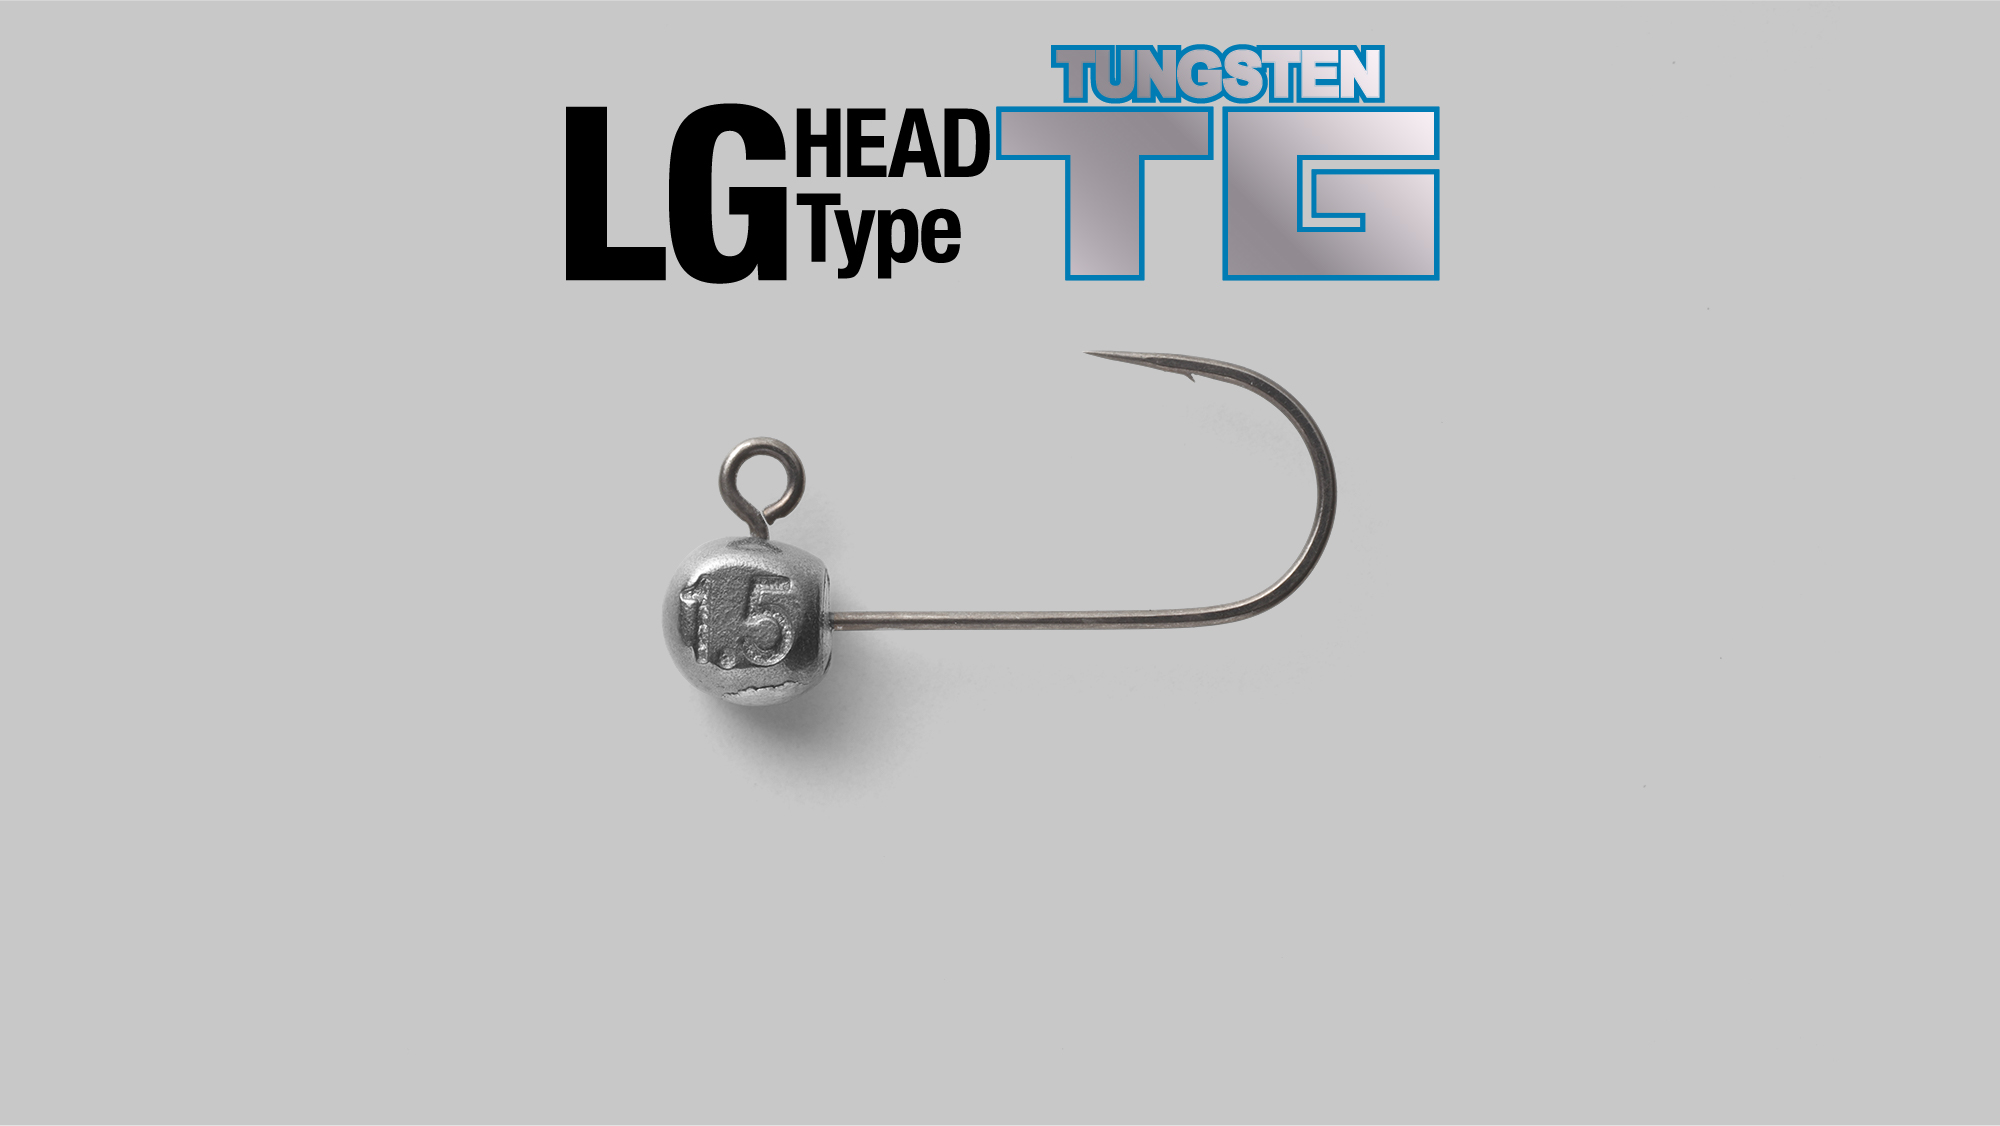 LGヘッド タイプ TG LG HEAD Type TG